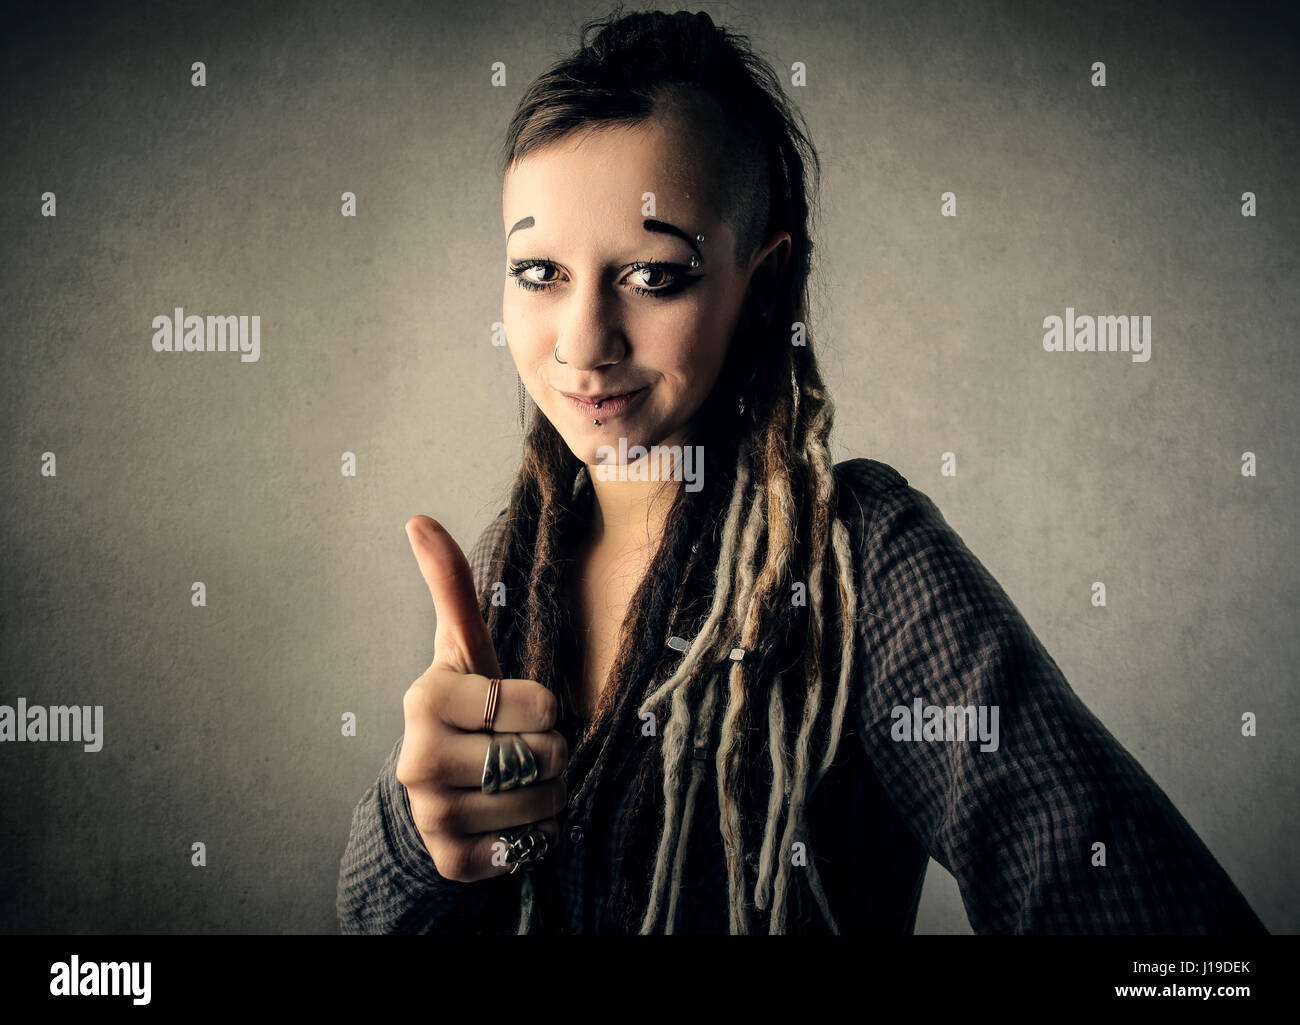 Alternative woman showing like sign Stock Photo